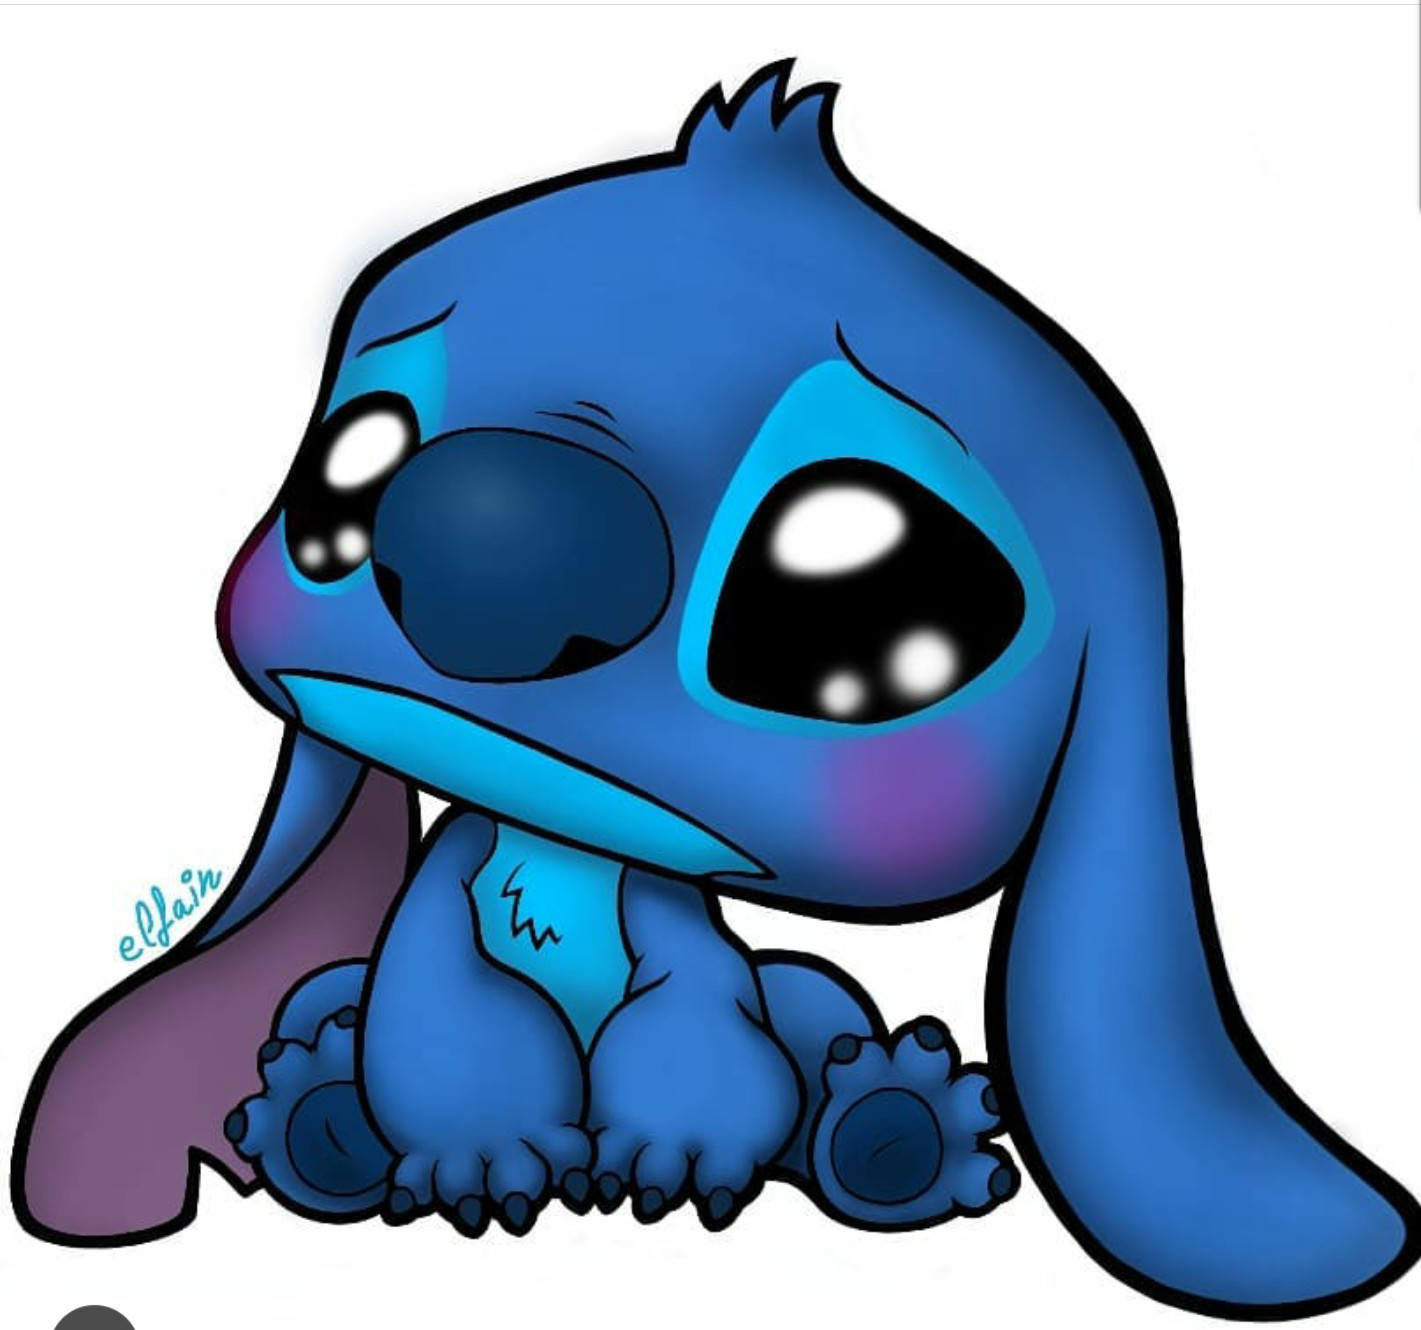 ArtStation - Cute Sad Stitch